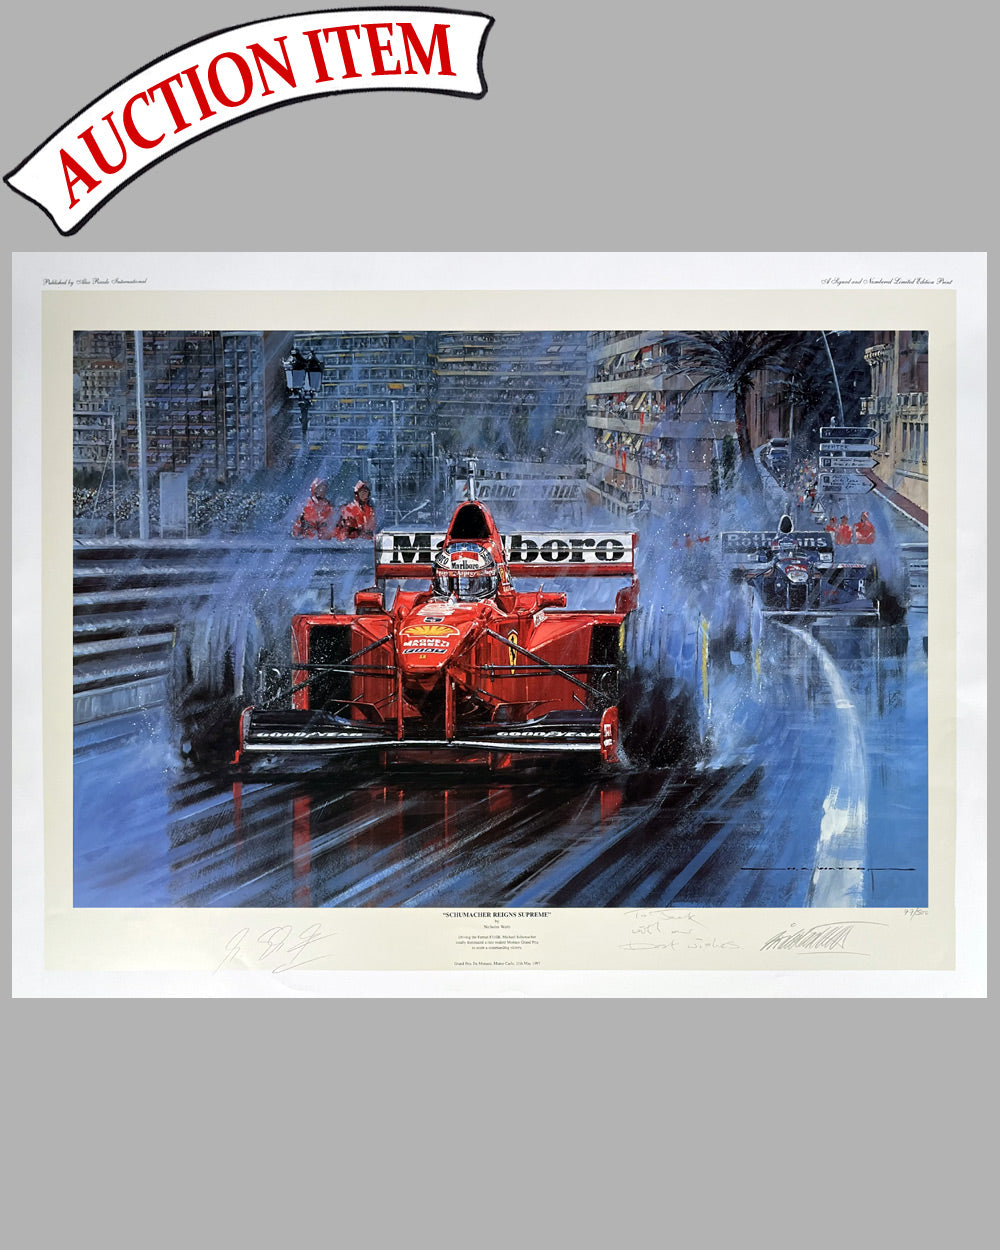 5 - Schumacher Reigns Supreme autographed print by Nicholas Watts